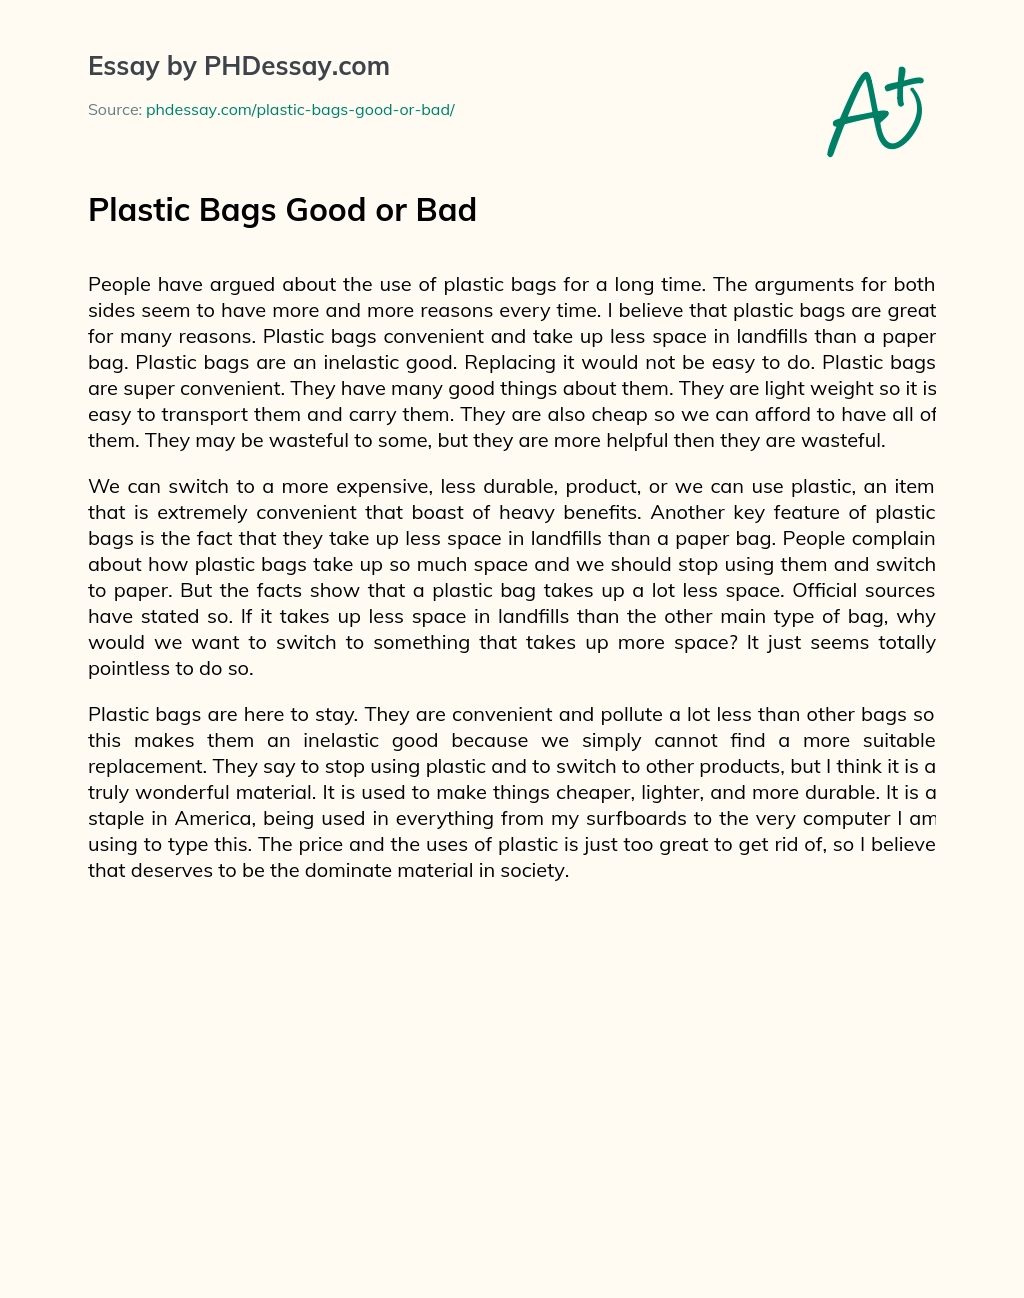 Plastic Bags Good or Bad essay